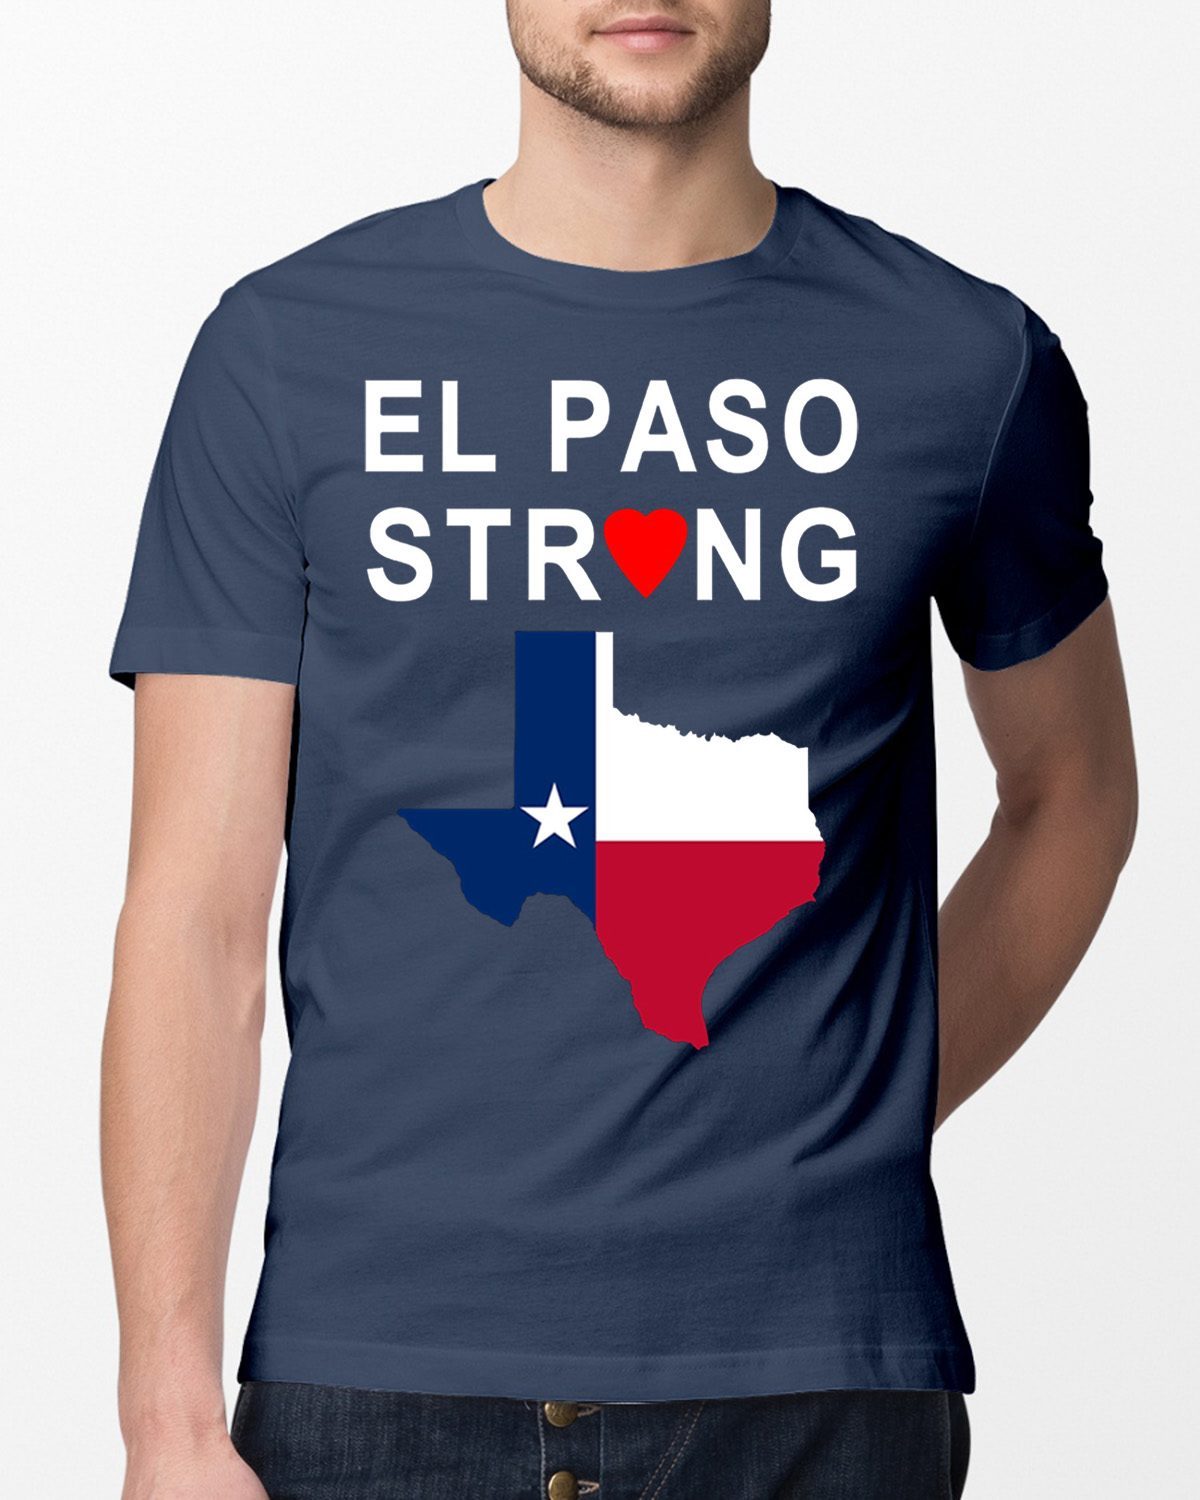 #ElPasoStrong El Paso Texas Strong Shirt